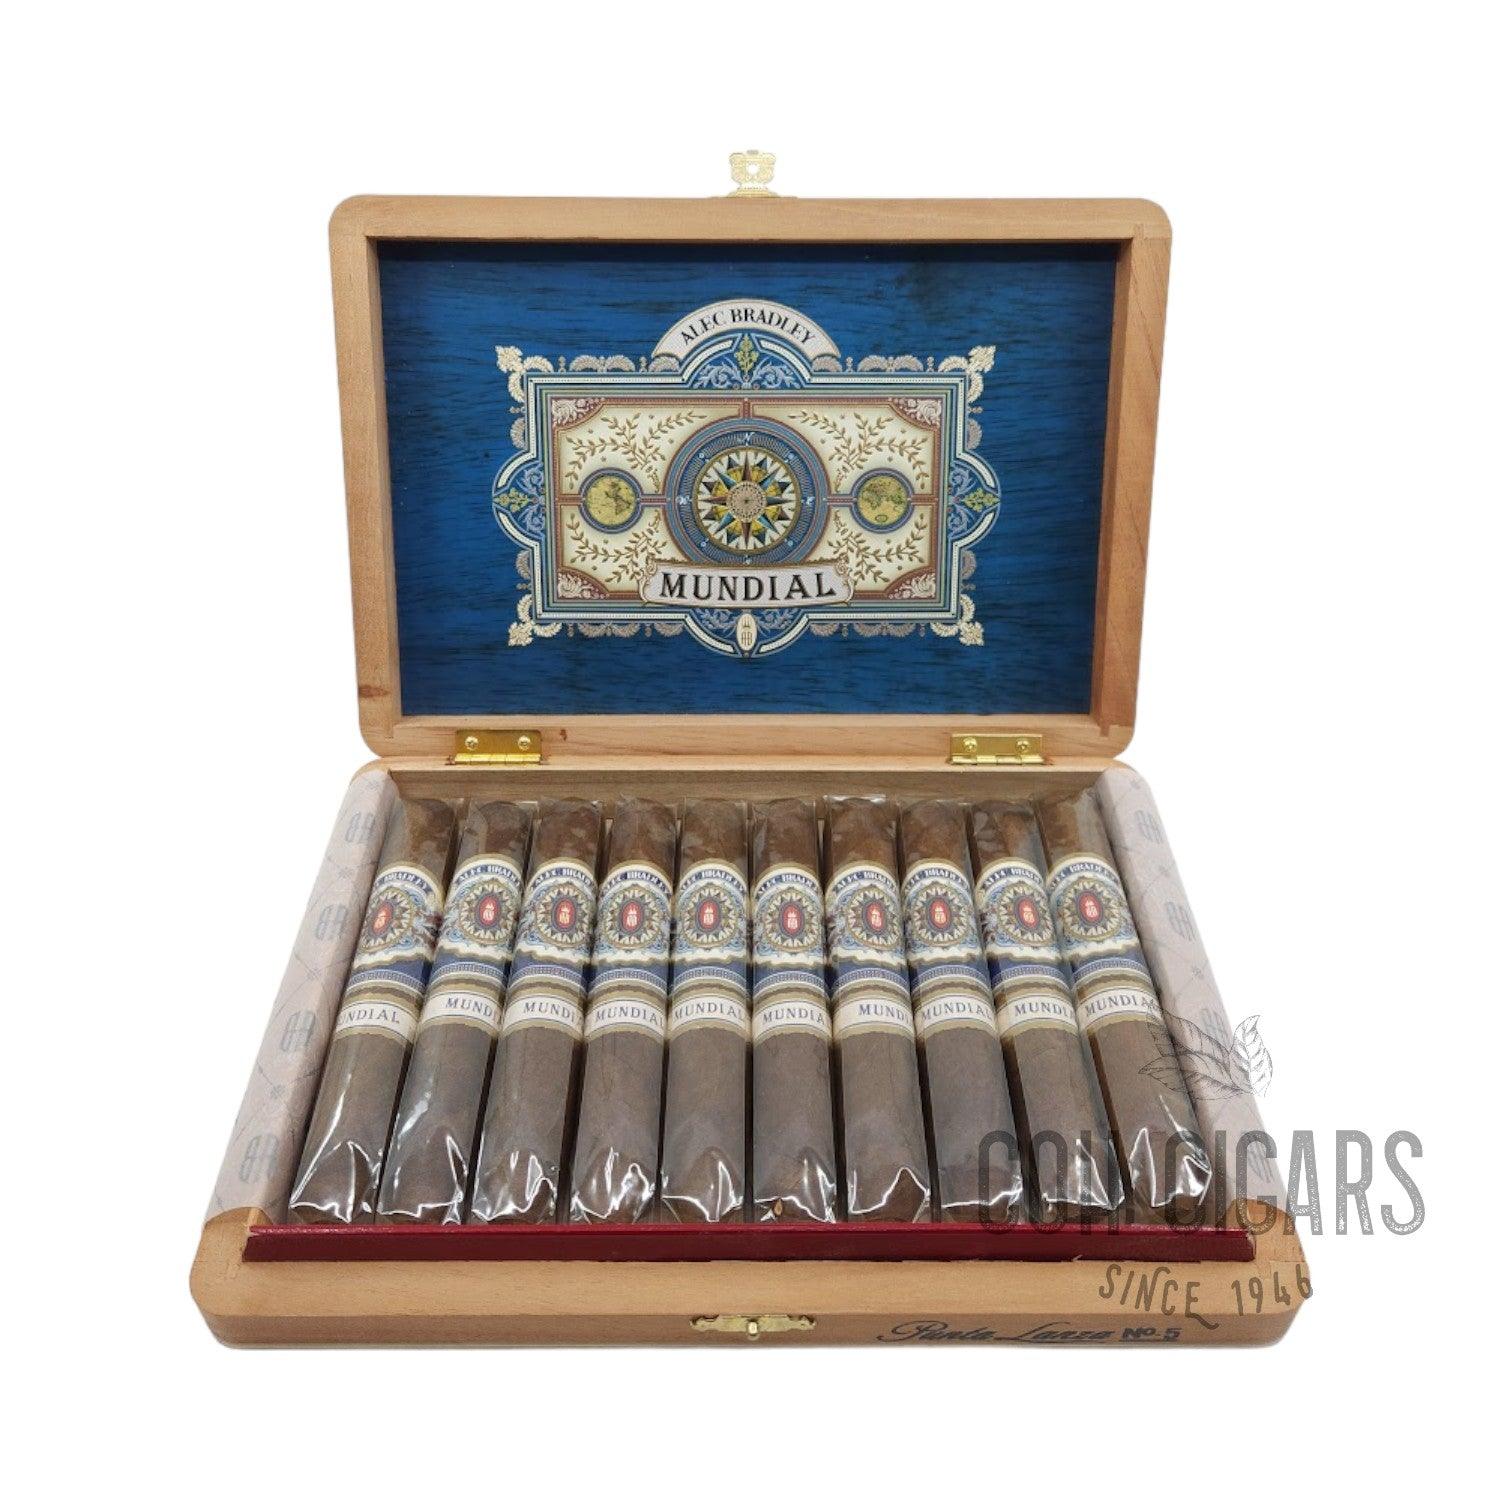 Alec Bradley Cigar | Mundial Punta Lanza No.5 | Box 10 - hk.cohcigars